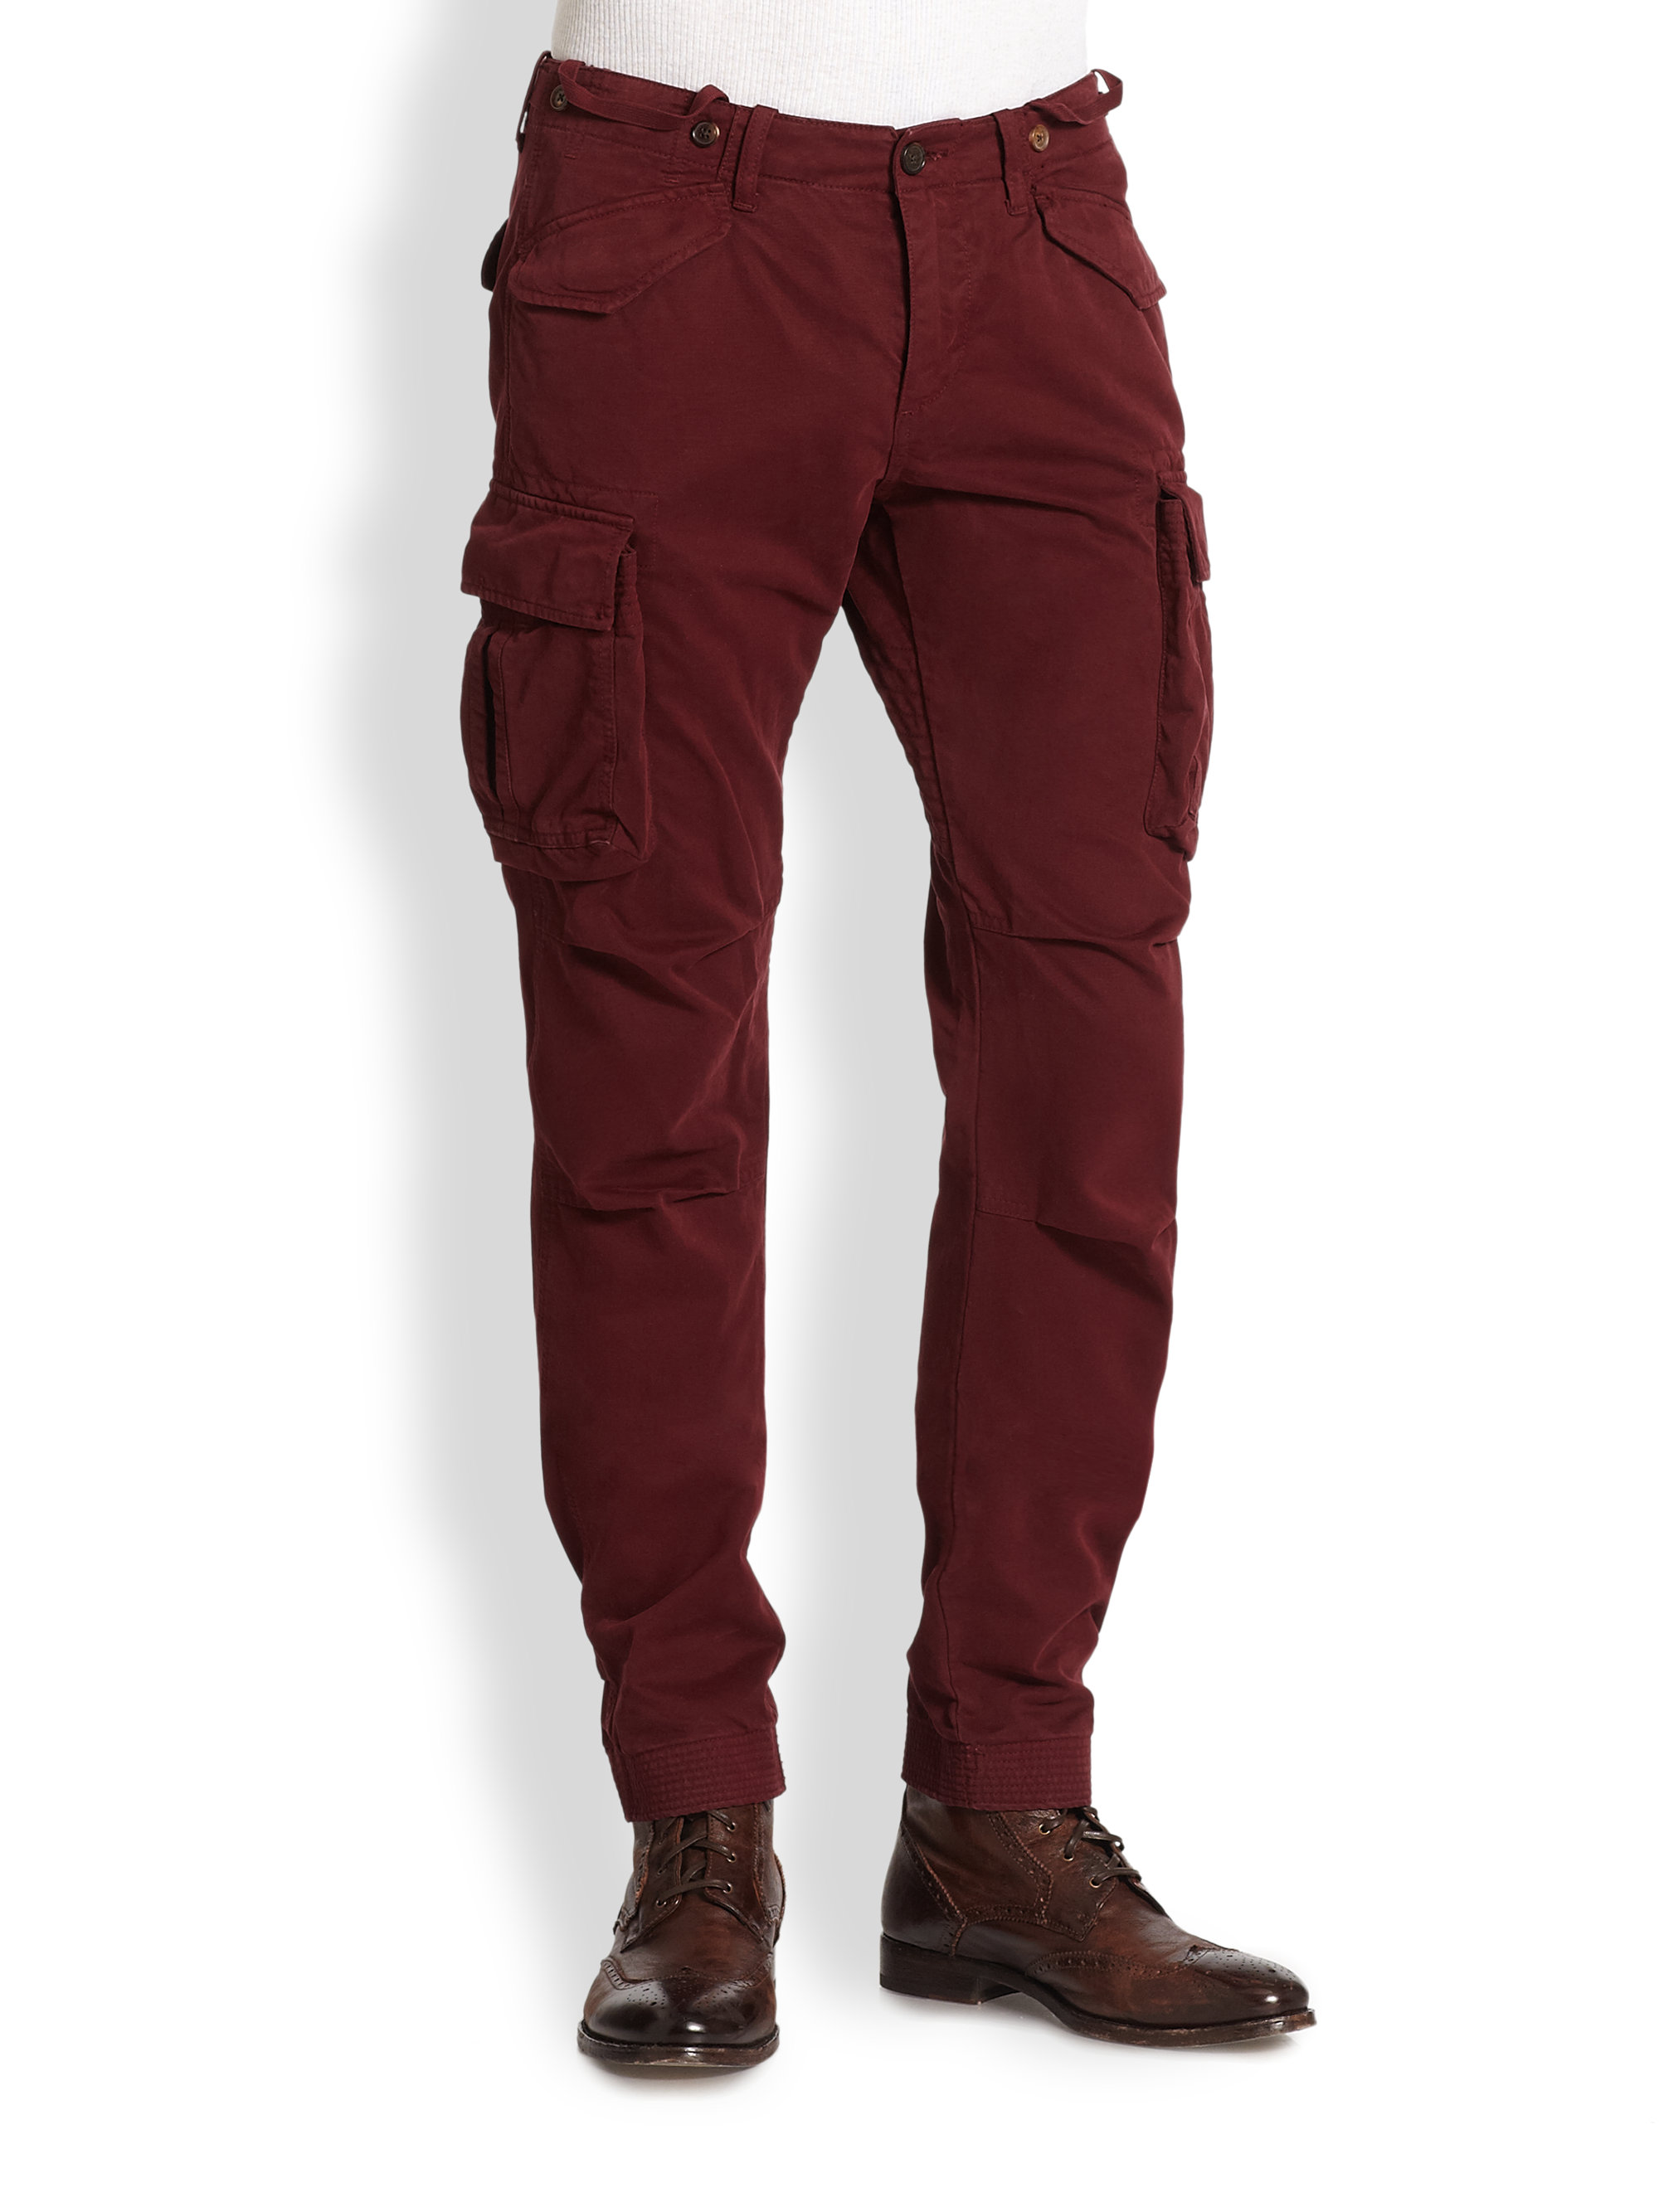 maroon cargo pants